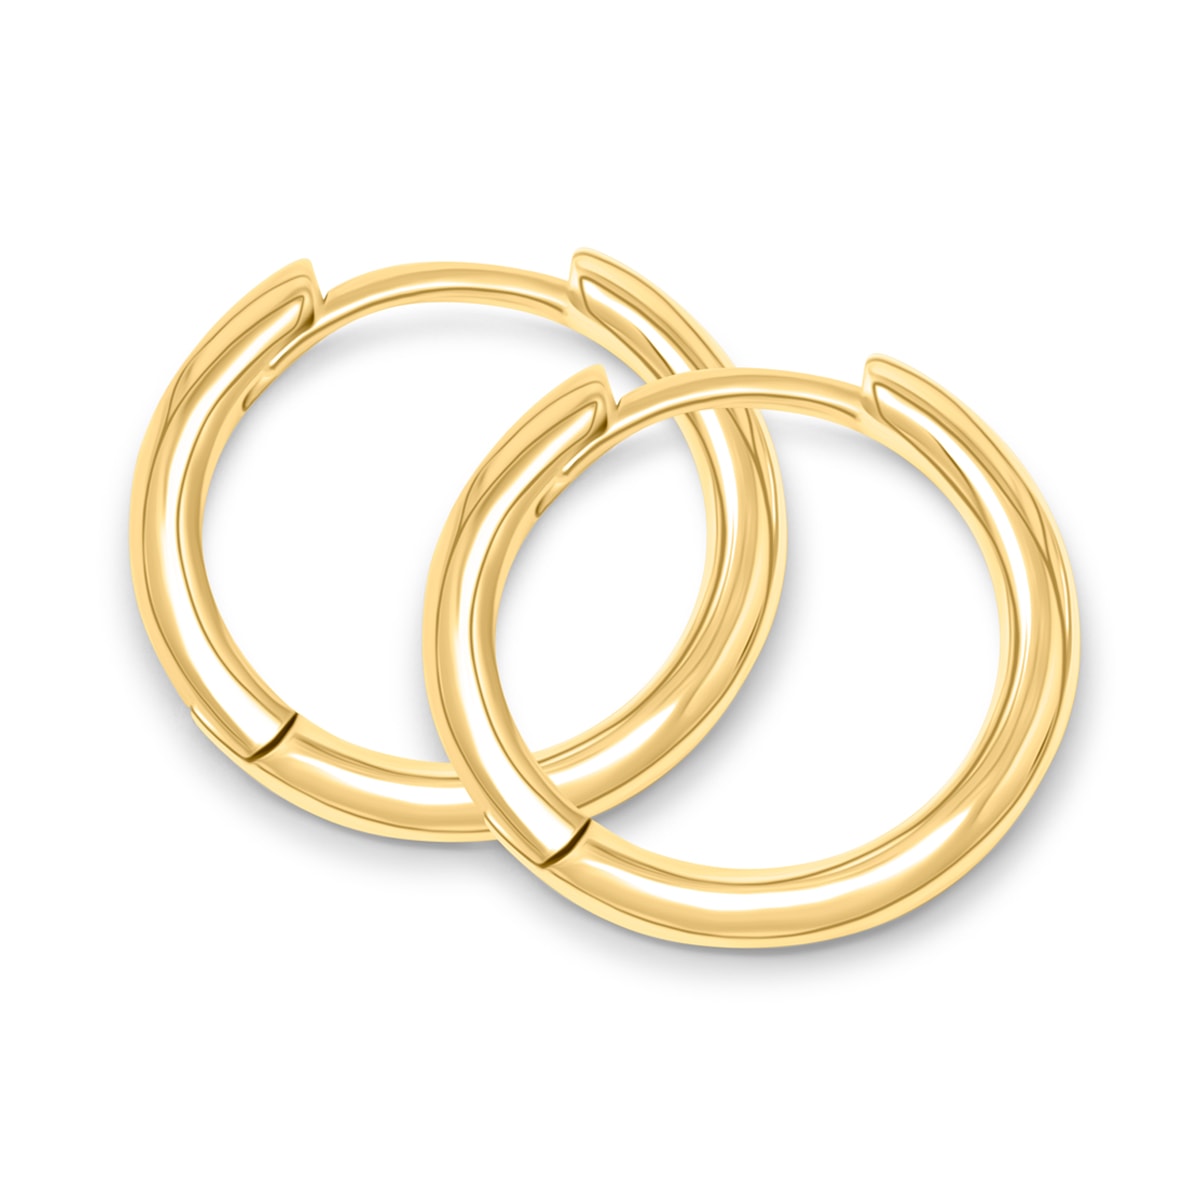 Unique gold hoop earrings